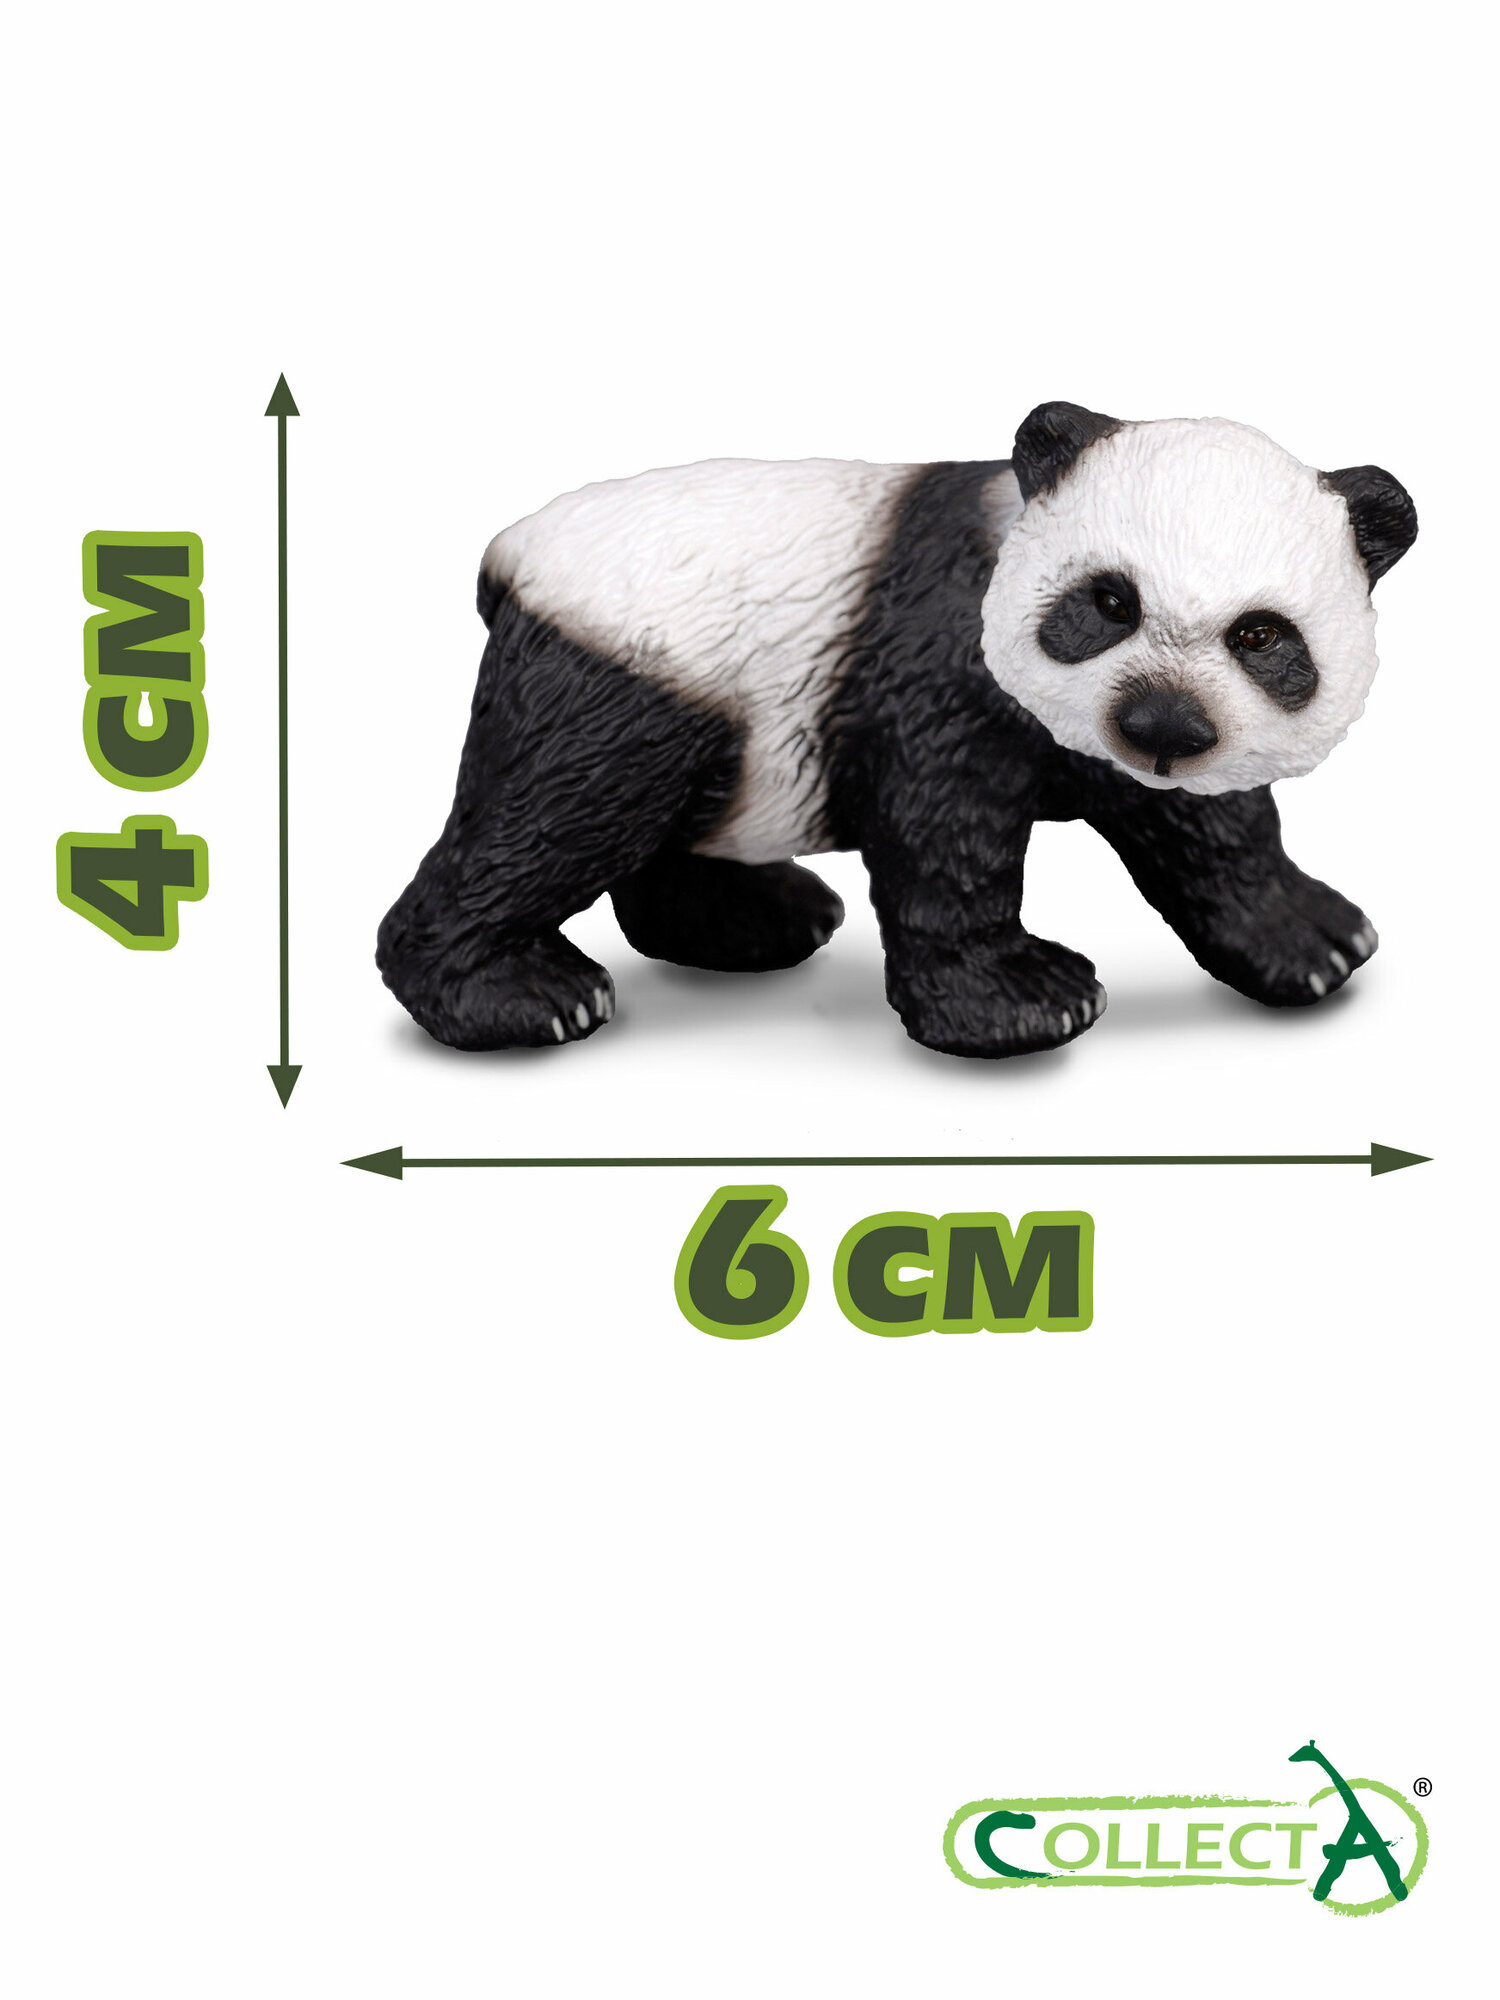 Фигурка животного Collecta, Детеныш большой панды